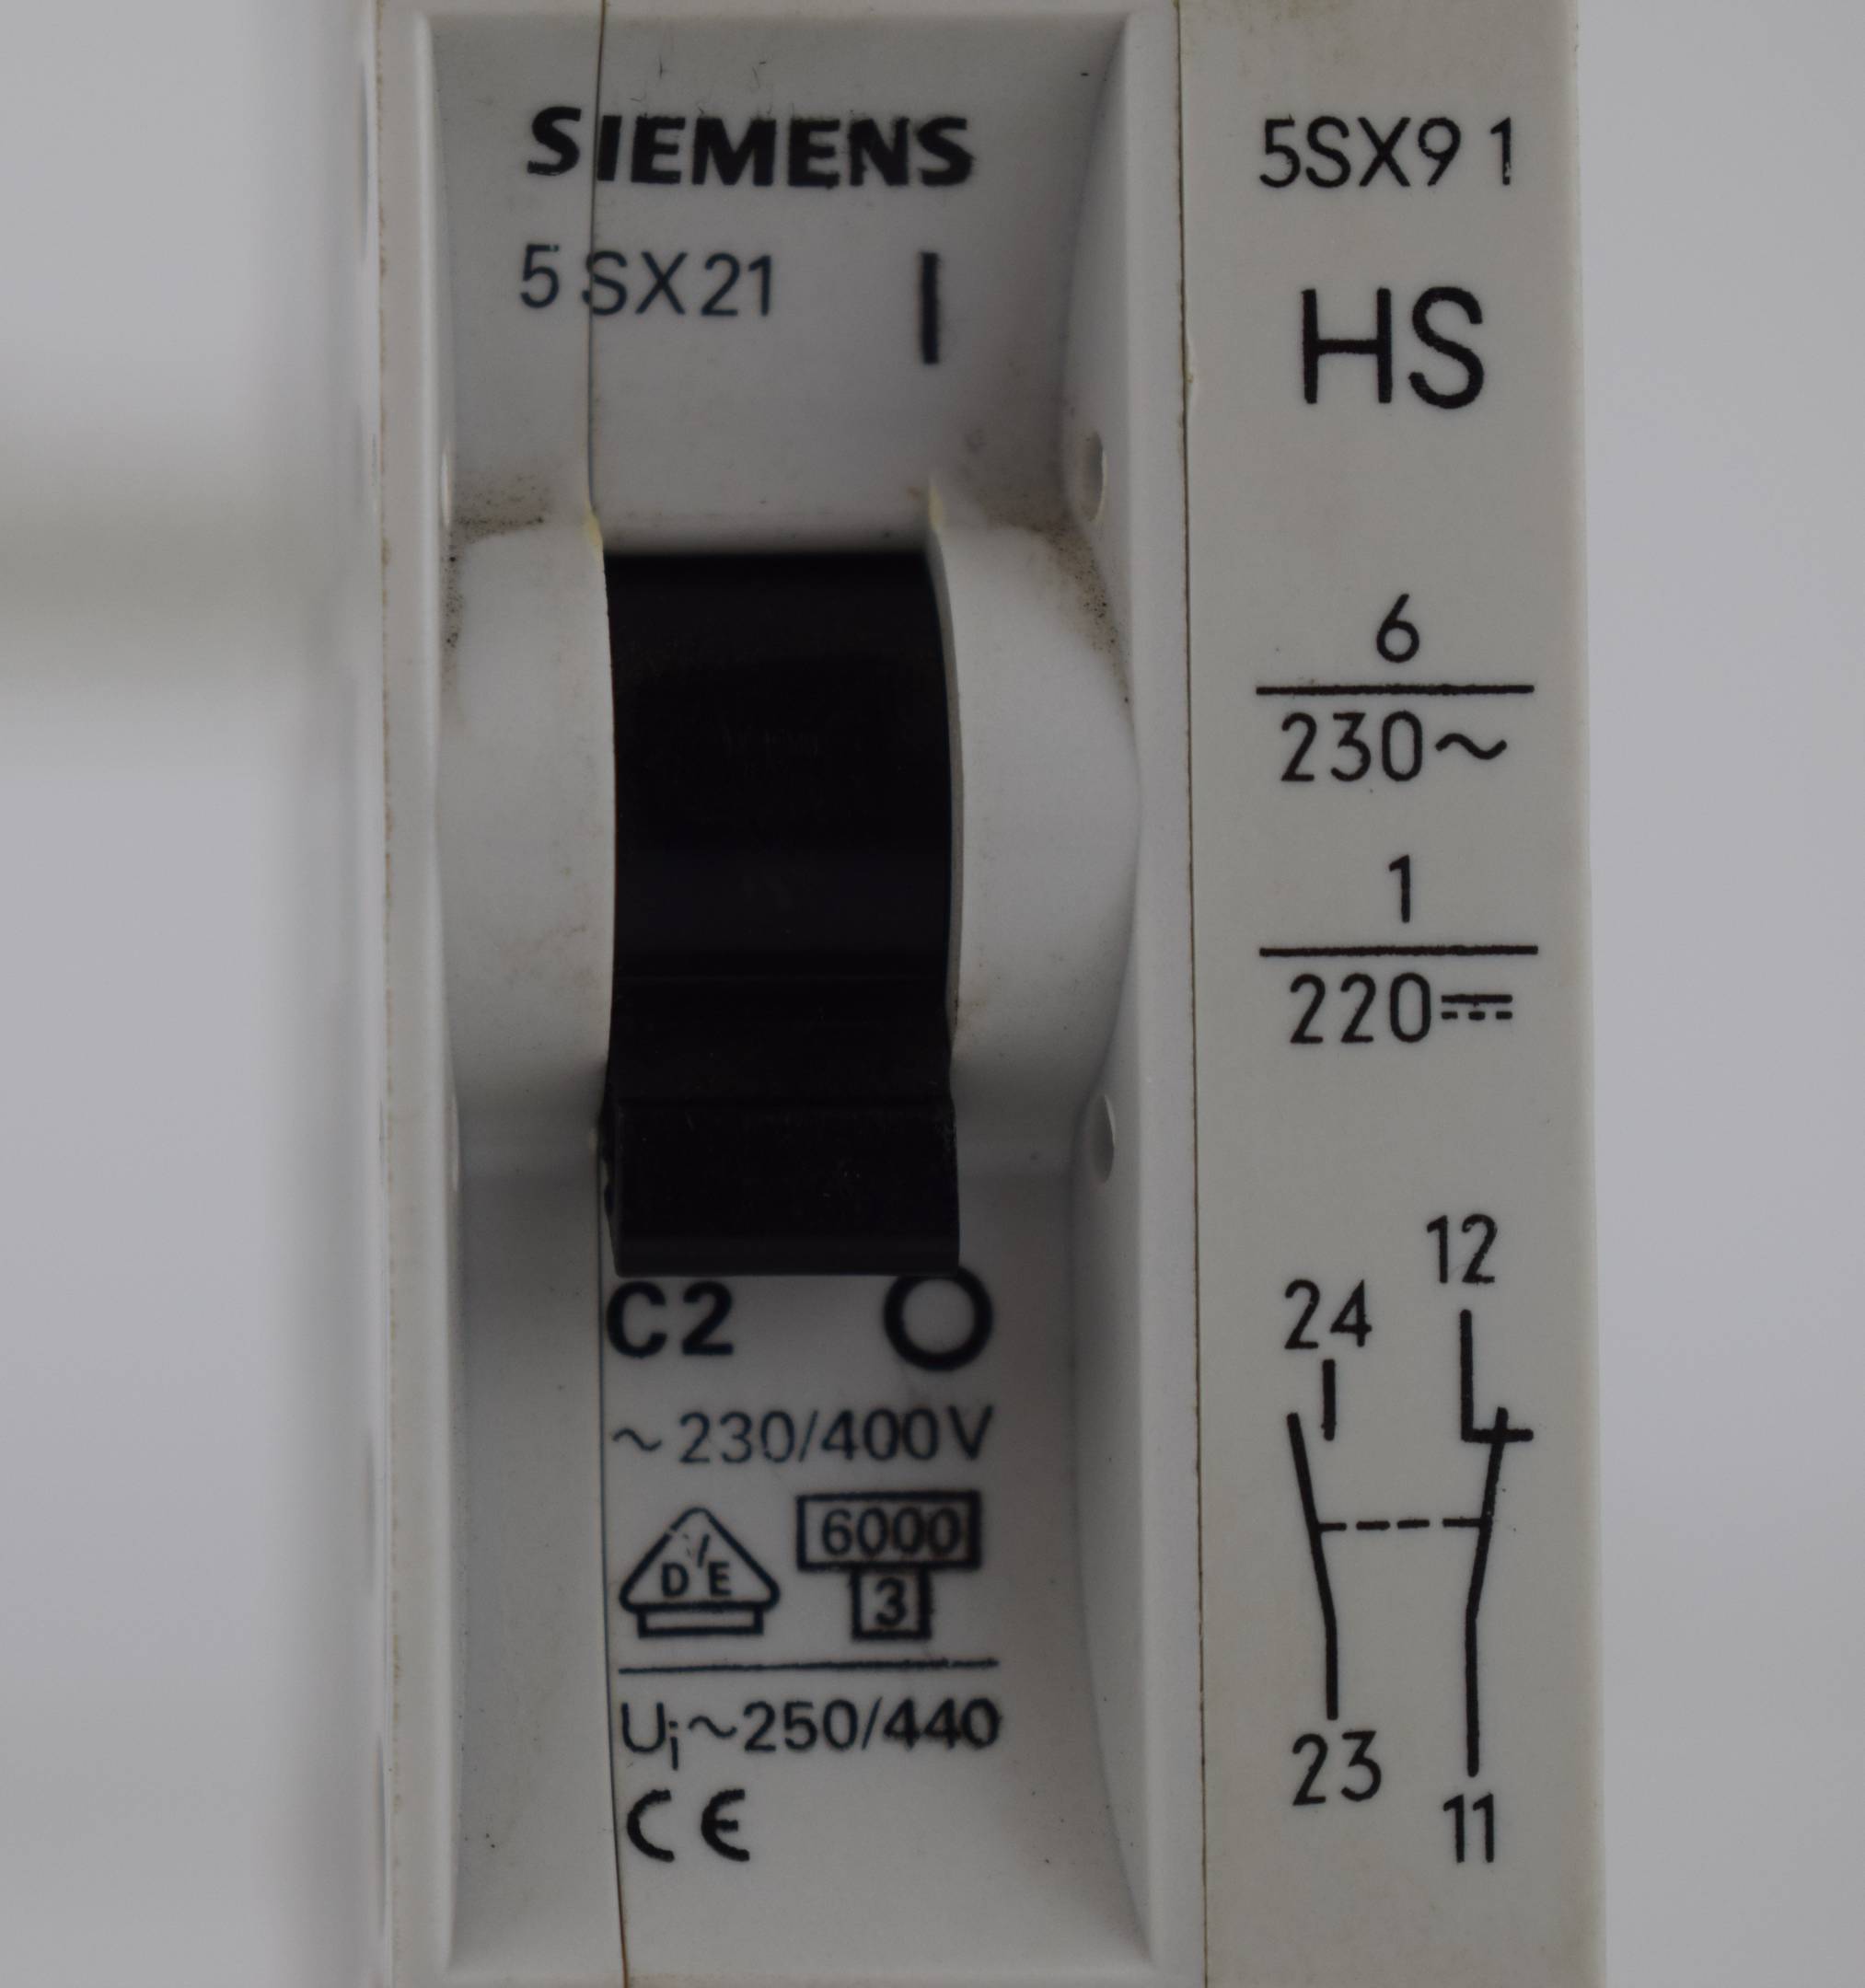 Siemens Leistungsschutzschalter 5SX21 C2 ( HS 5SX91 ) 